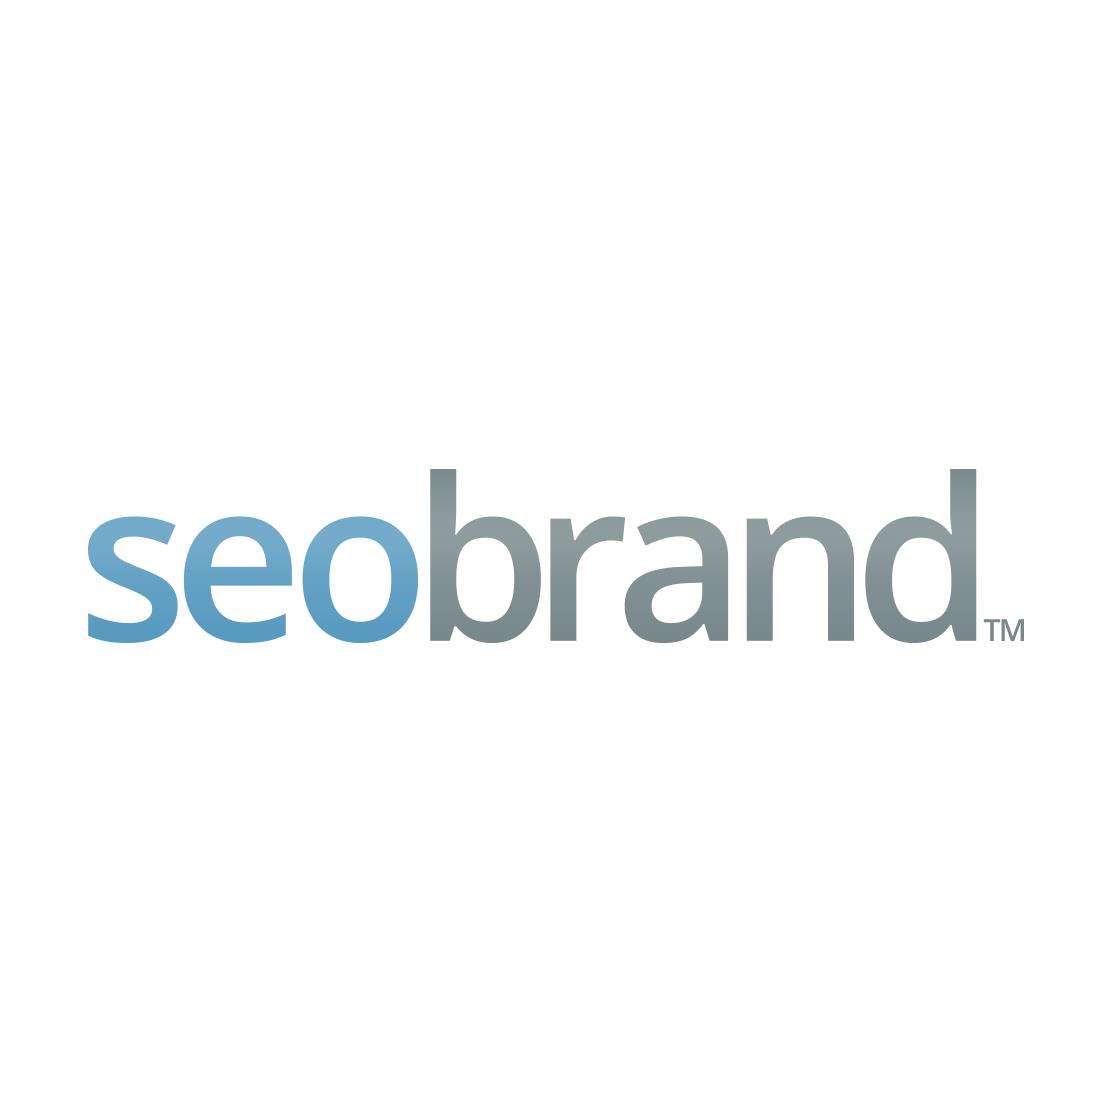 Best Boston SEO Business Logo: SEO Brand